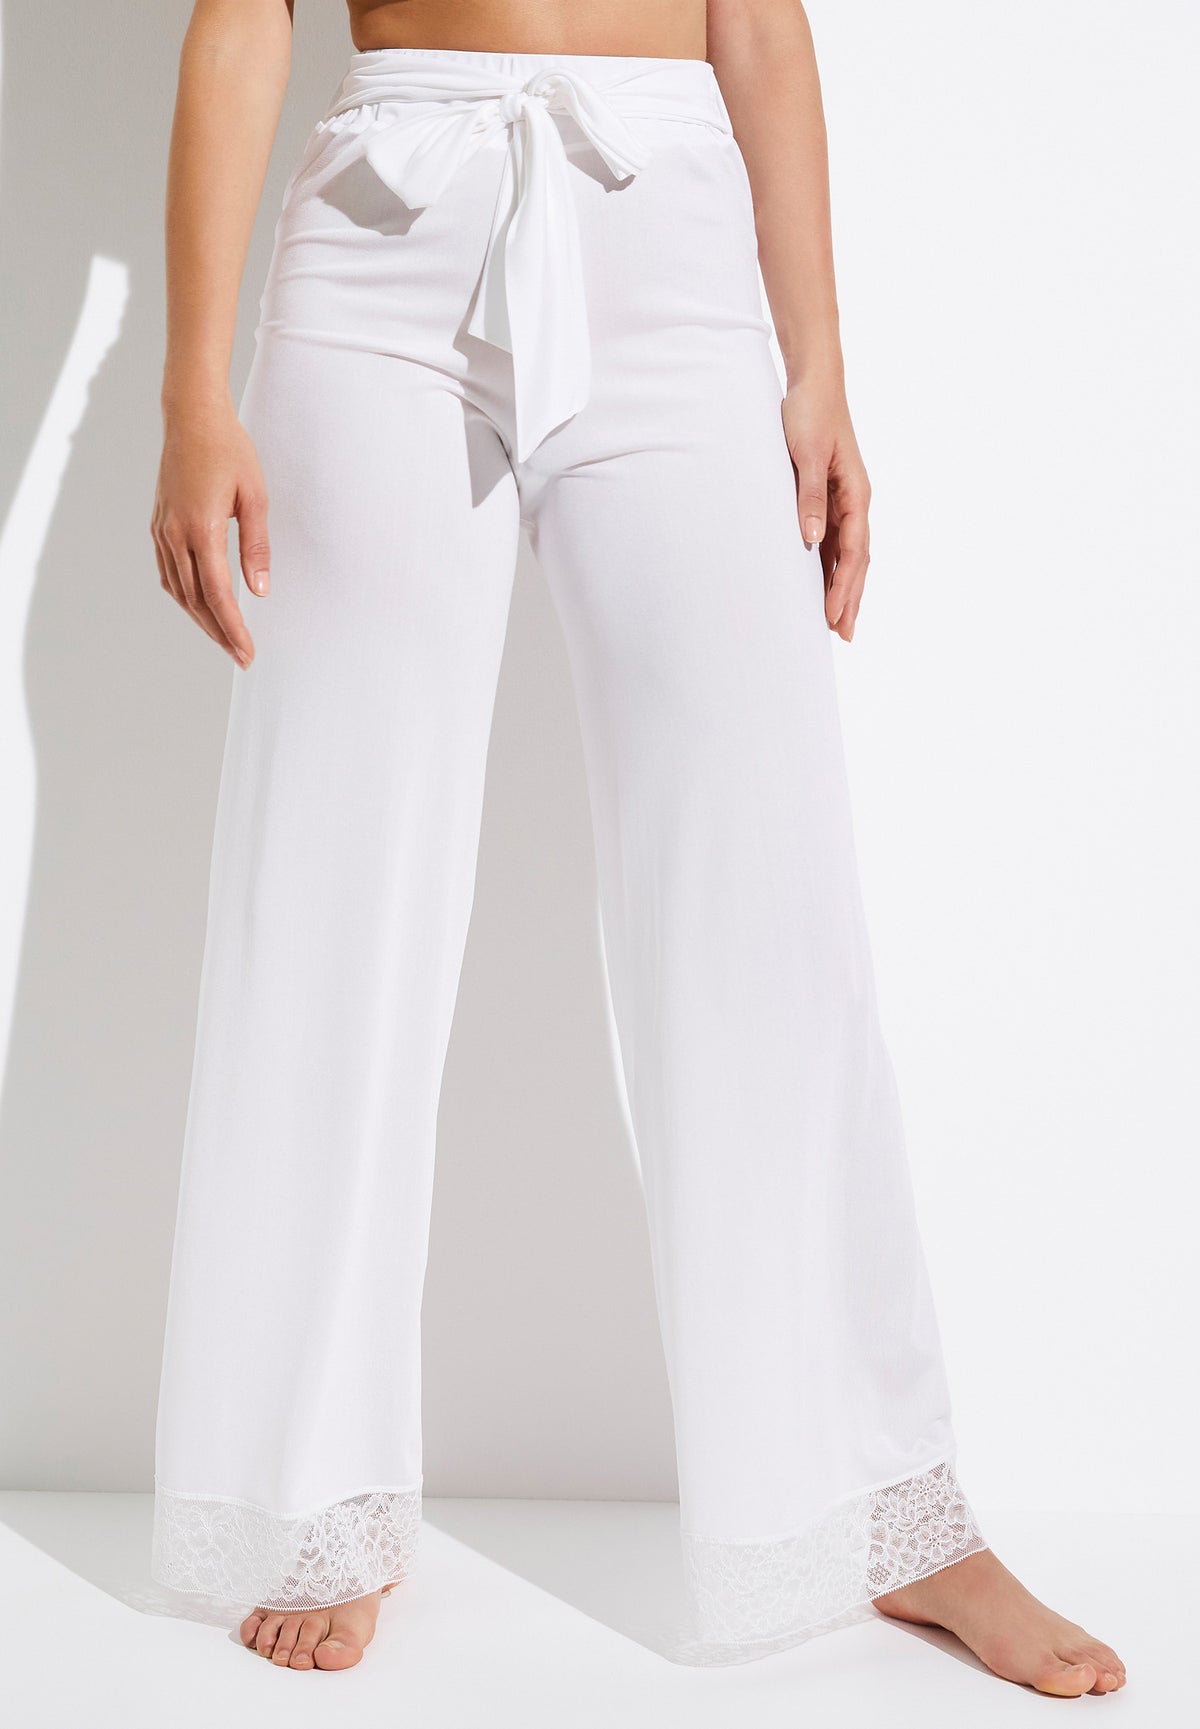 Silk Charmeuse | Pants Long - white